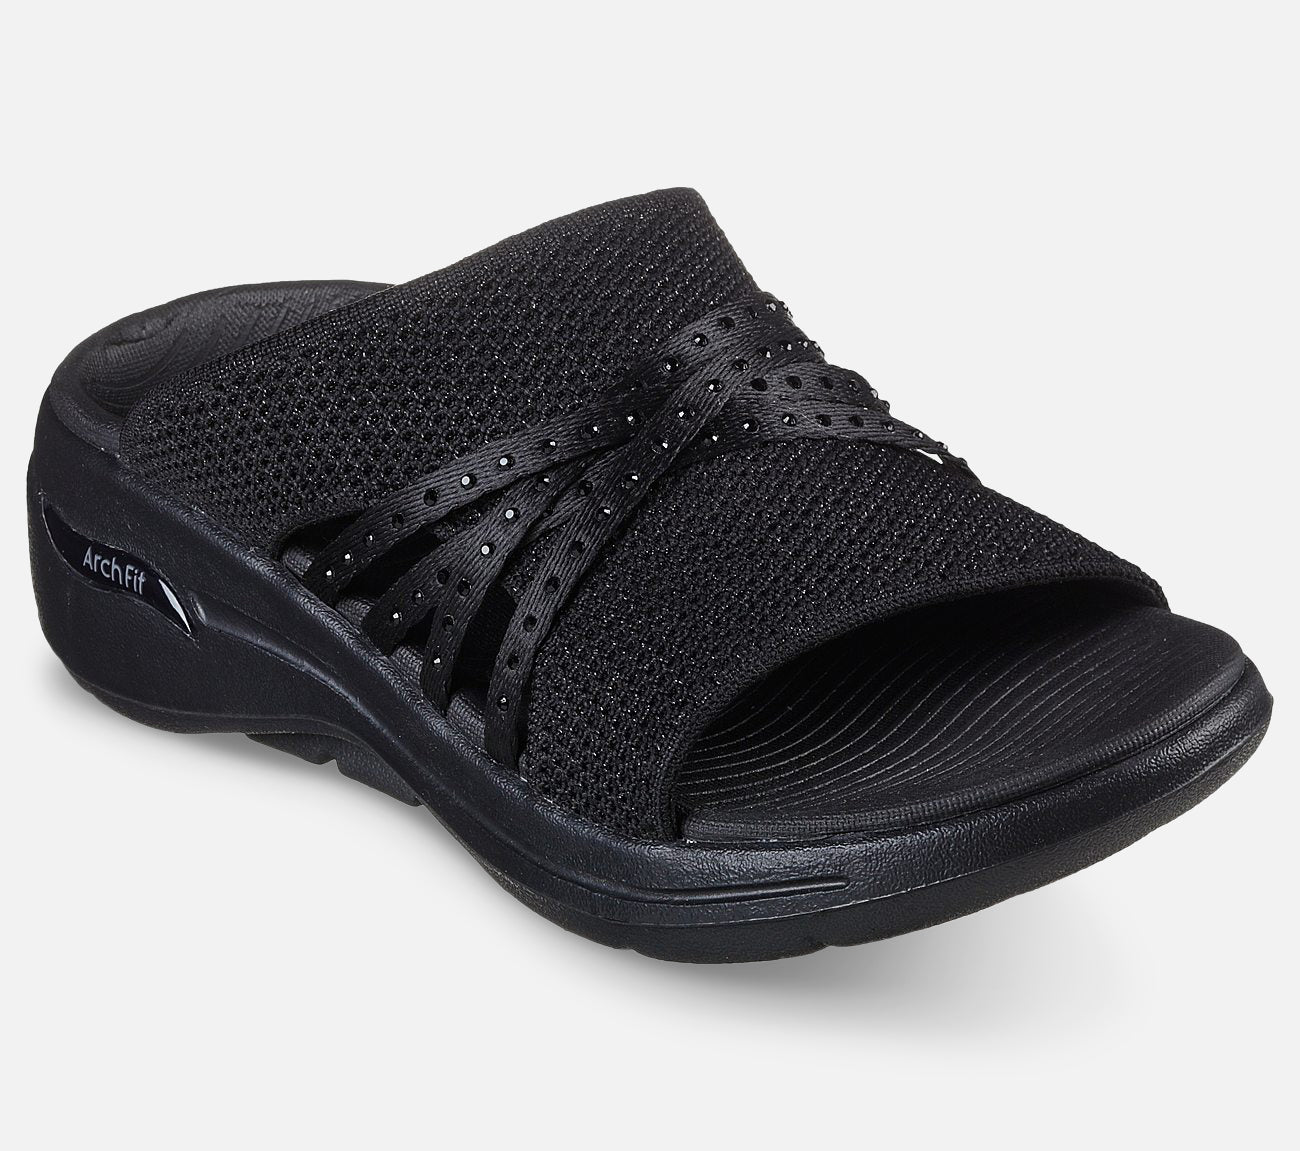 GO WALK Arch Fit Sandal - Glisten Sandal Skechers